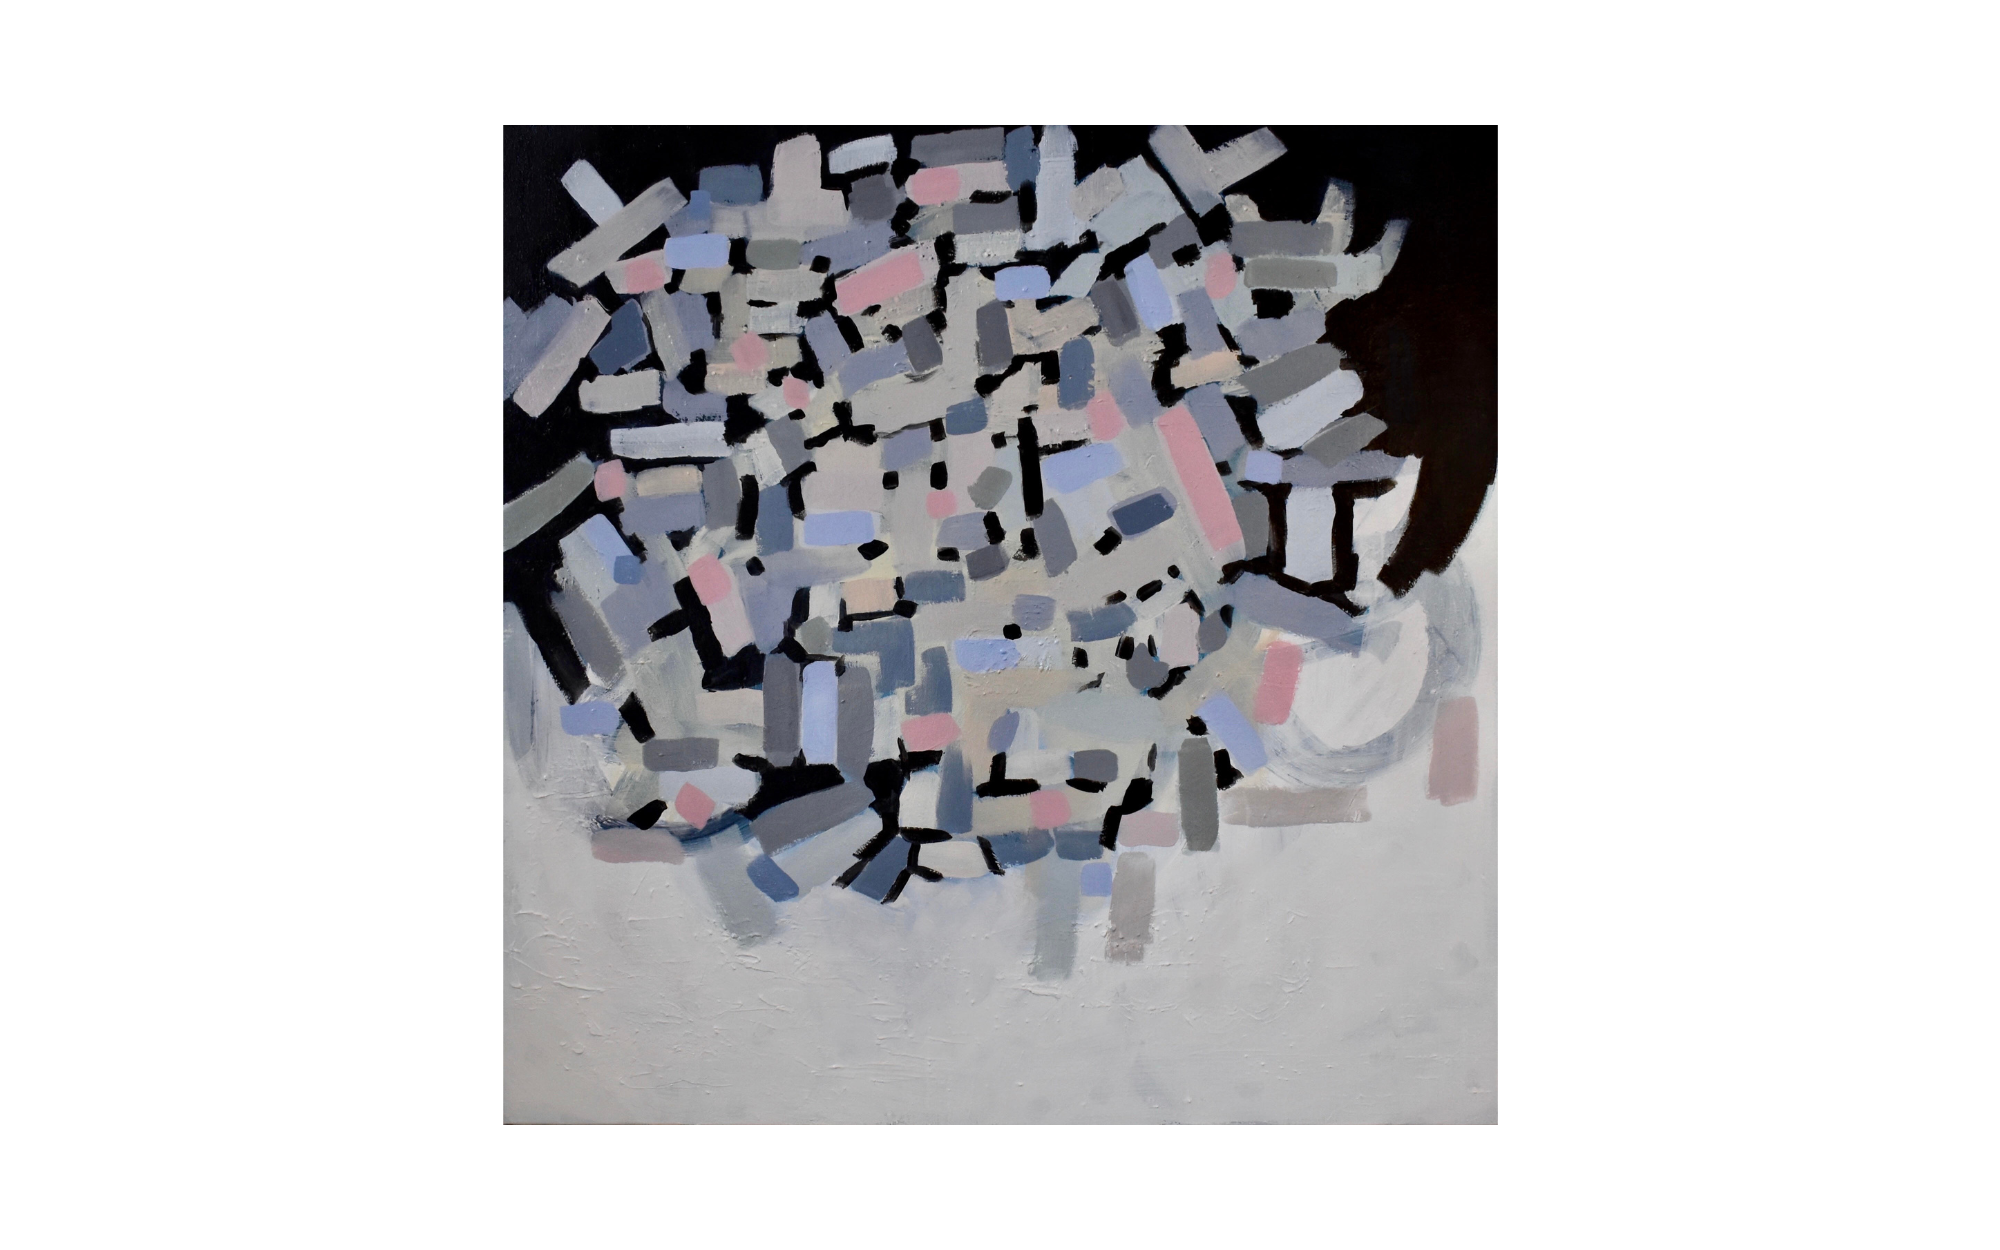  Madeline Silk,  Untitled I , 36 x 36" acrylic on canvas, $2,500 